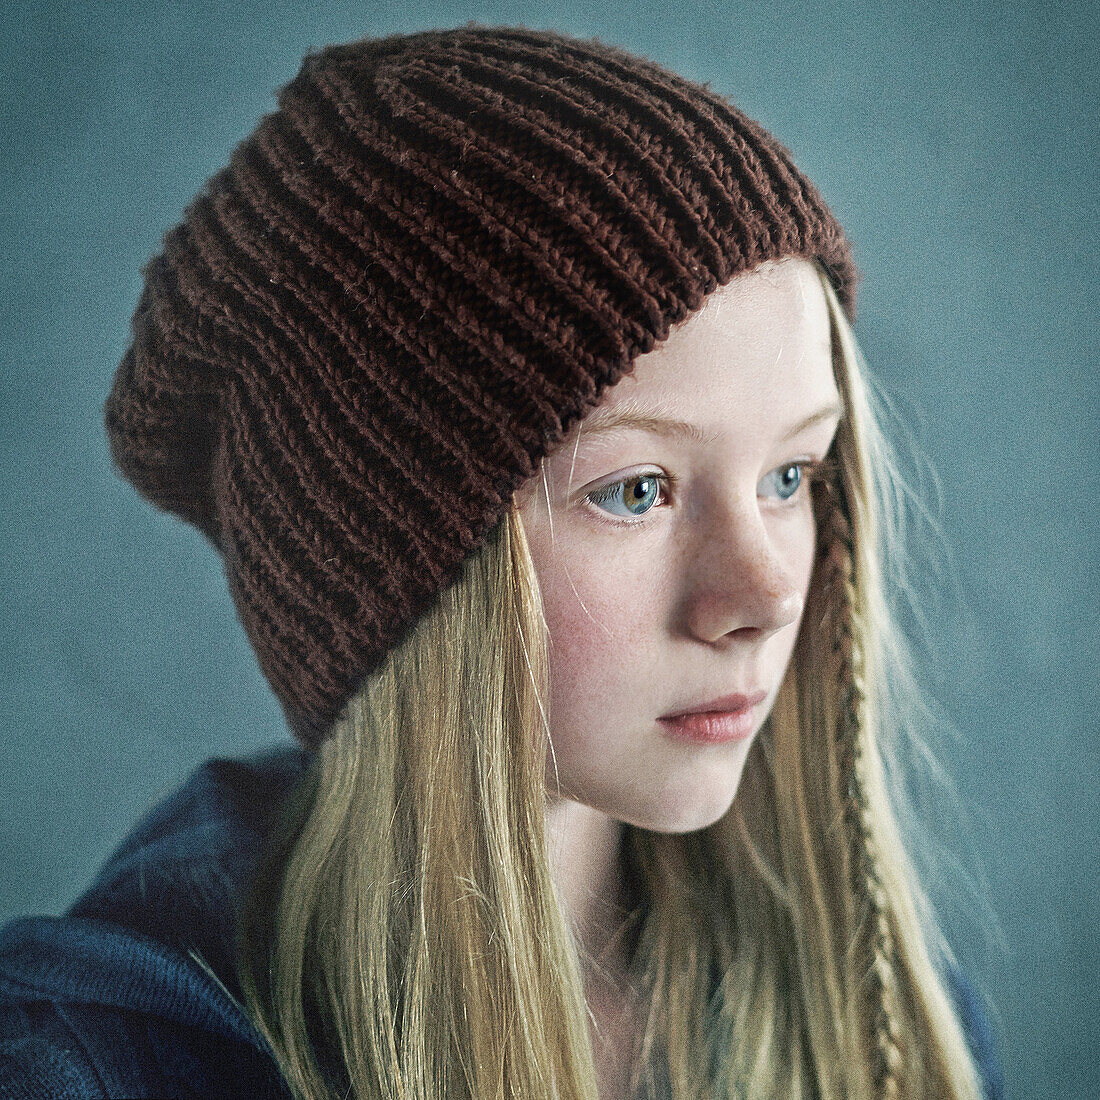 Teenage girl wearing knitted cap, Nizniy Tagil, Sverdlovsk, Russia